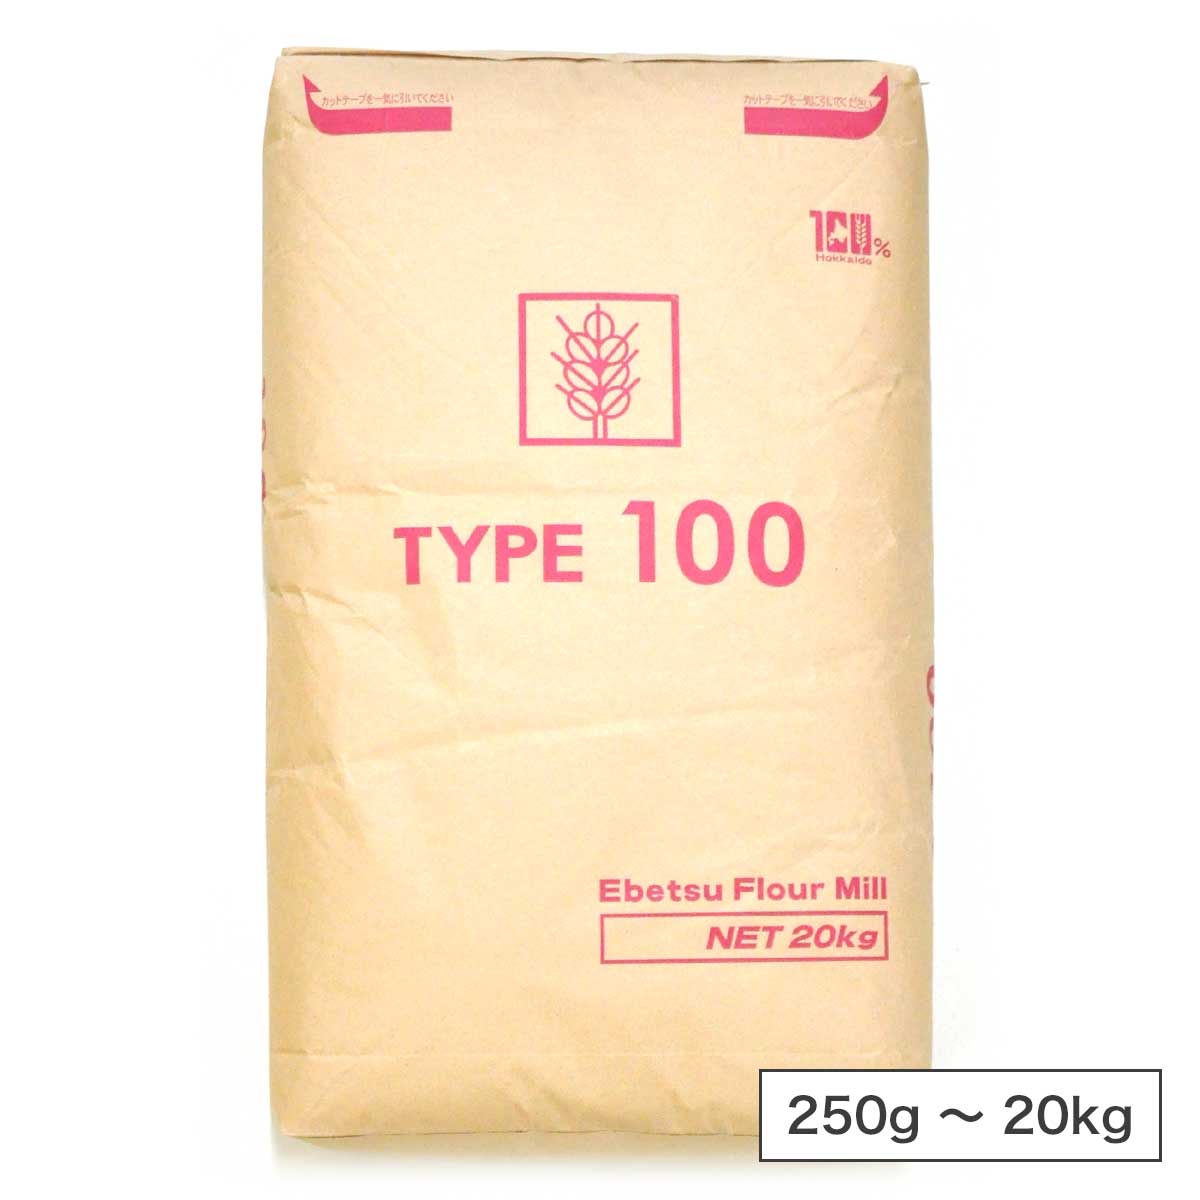 江別製粉 タイプ100 準強力粉 北海道産 小麦粉【250g〜20kg】